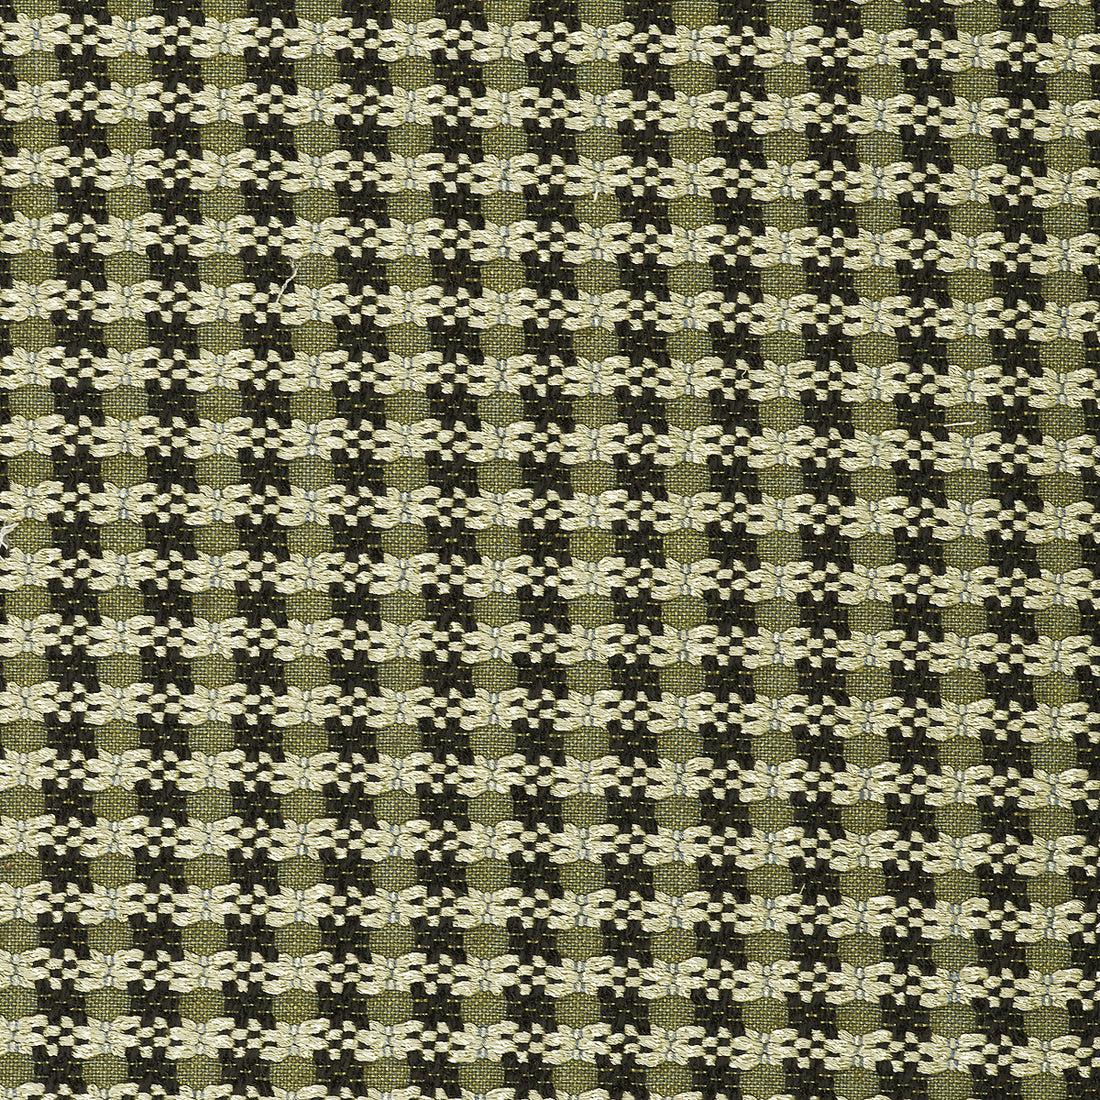 Bermudo fabric in verde color - pattern LCT1005.004.0 - by Gaston y Daniela in the Lorenzo Castillo V collection